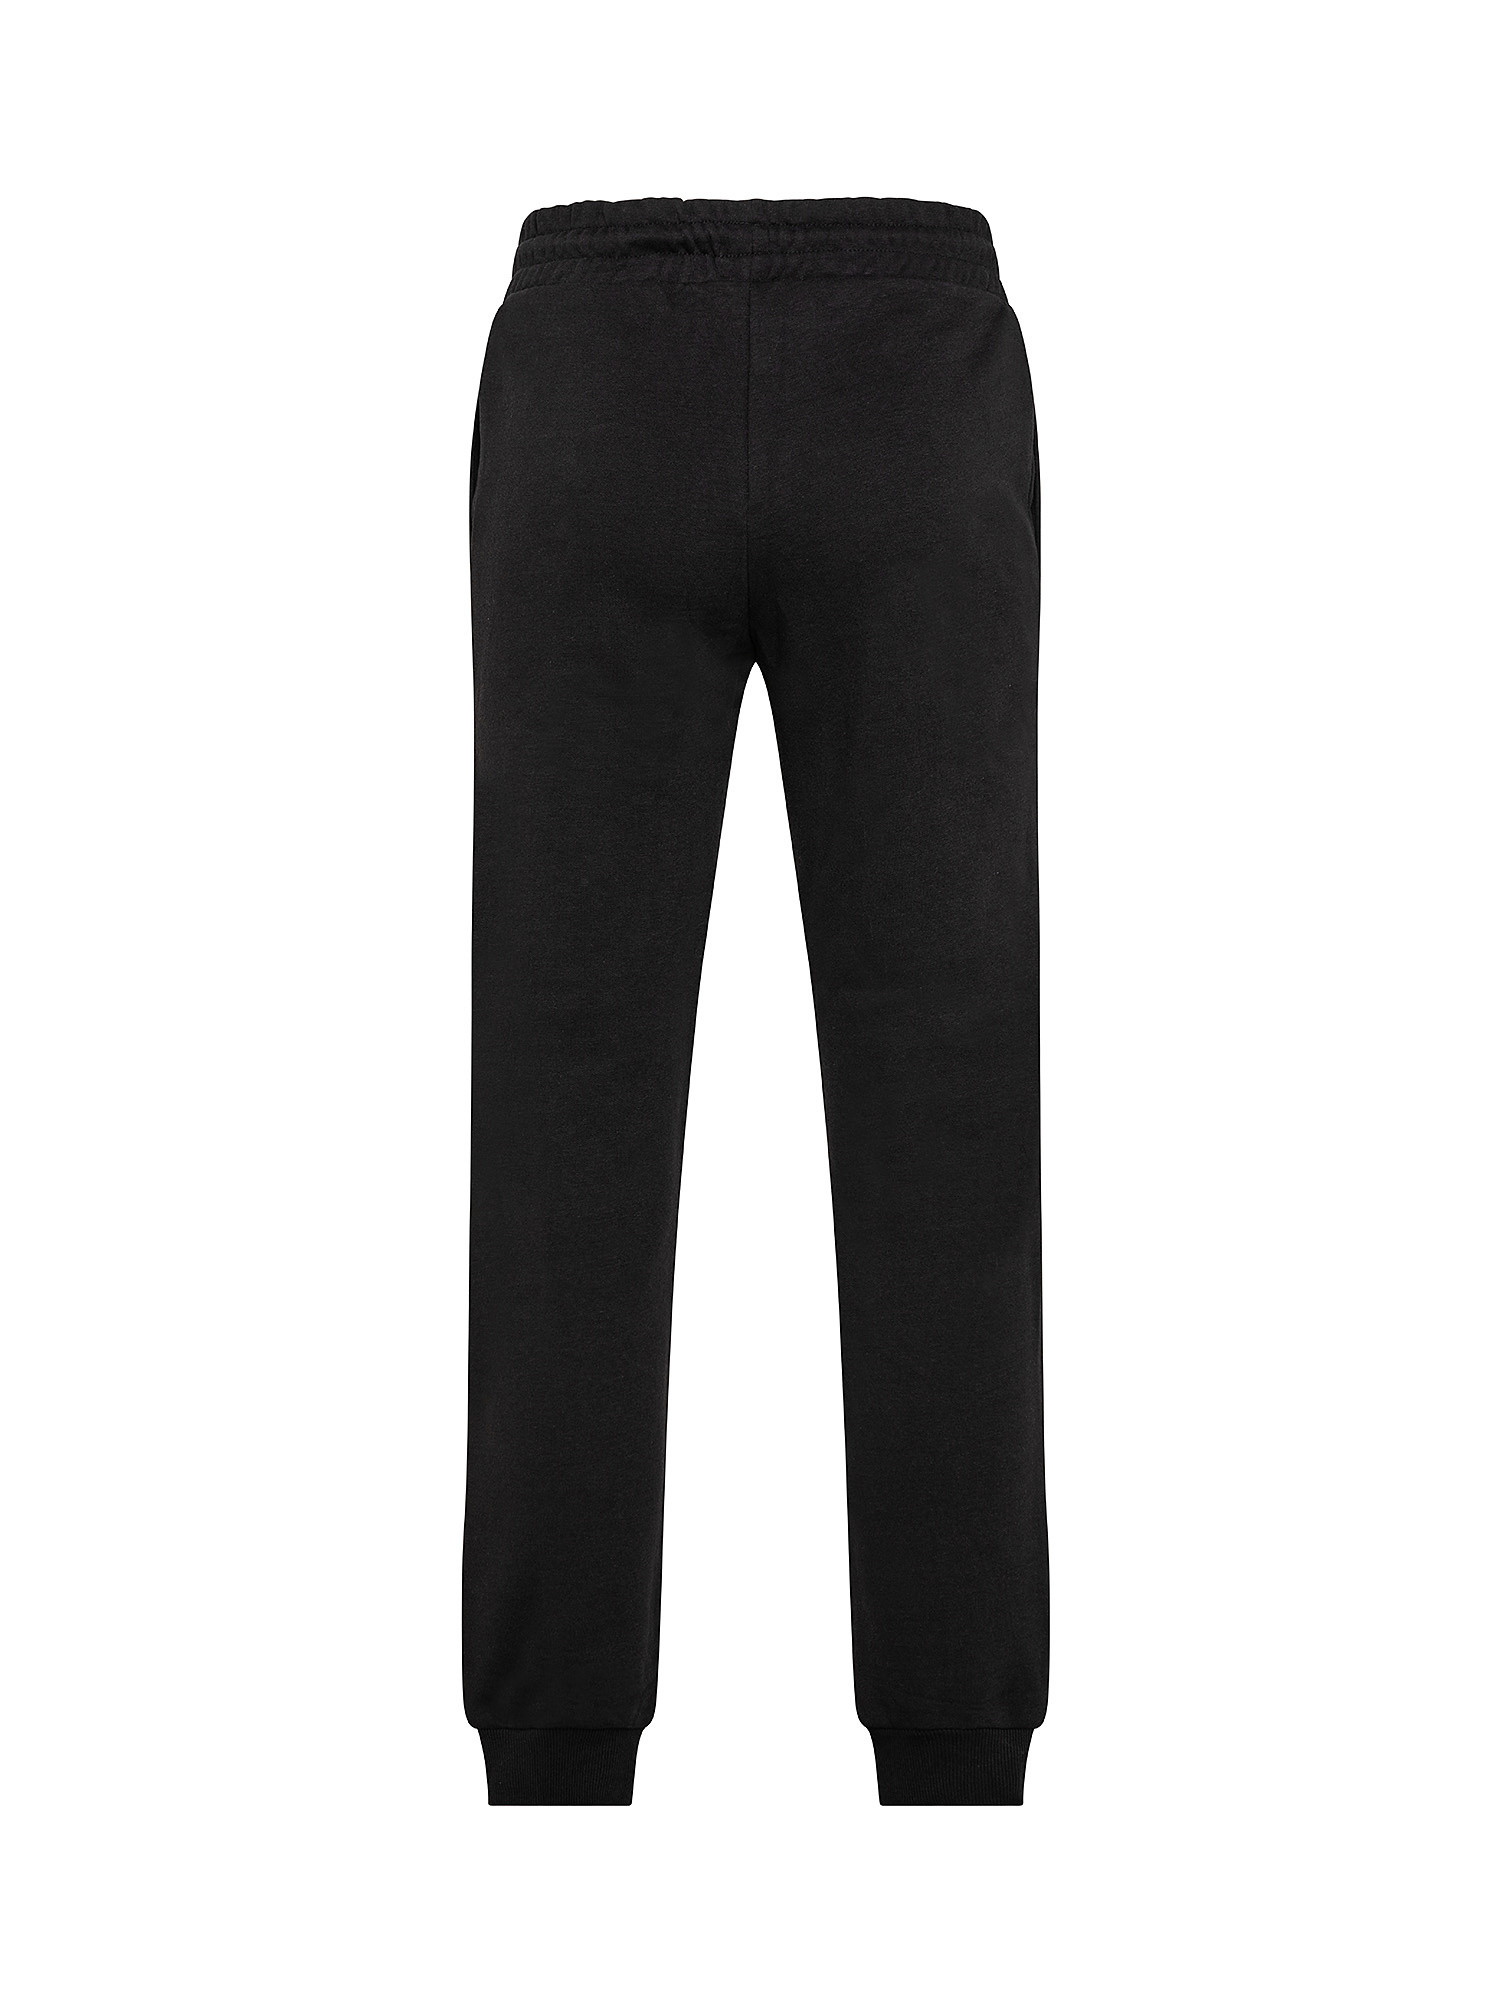 Sweatpants in cotton, Black, large